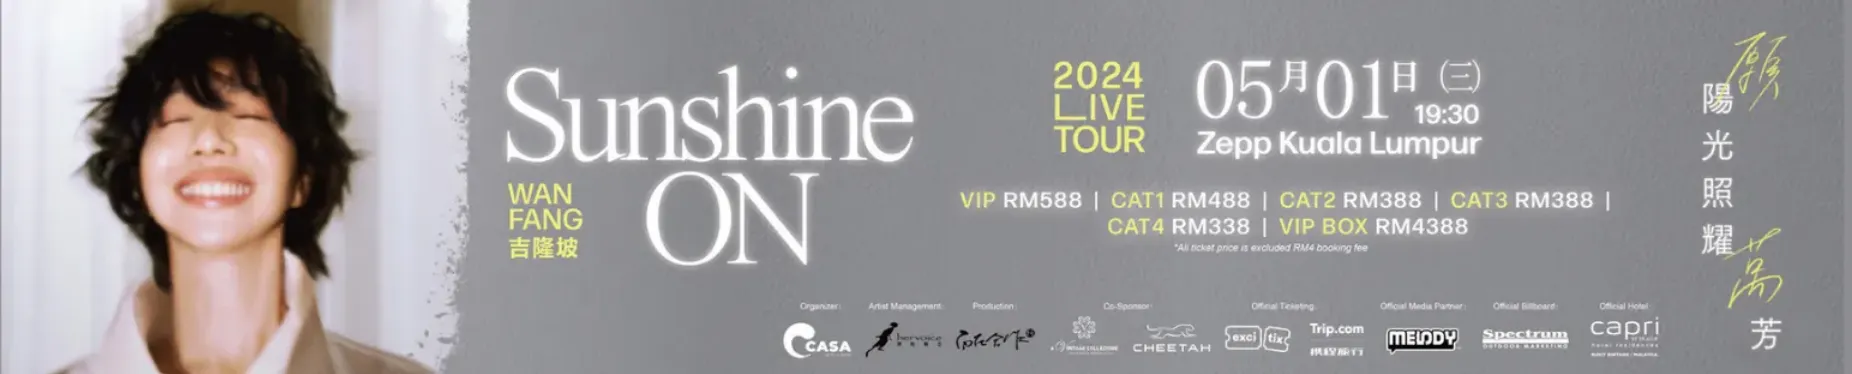 WAN FANG SunShine ON Live Tour 2024